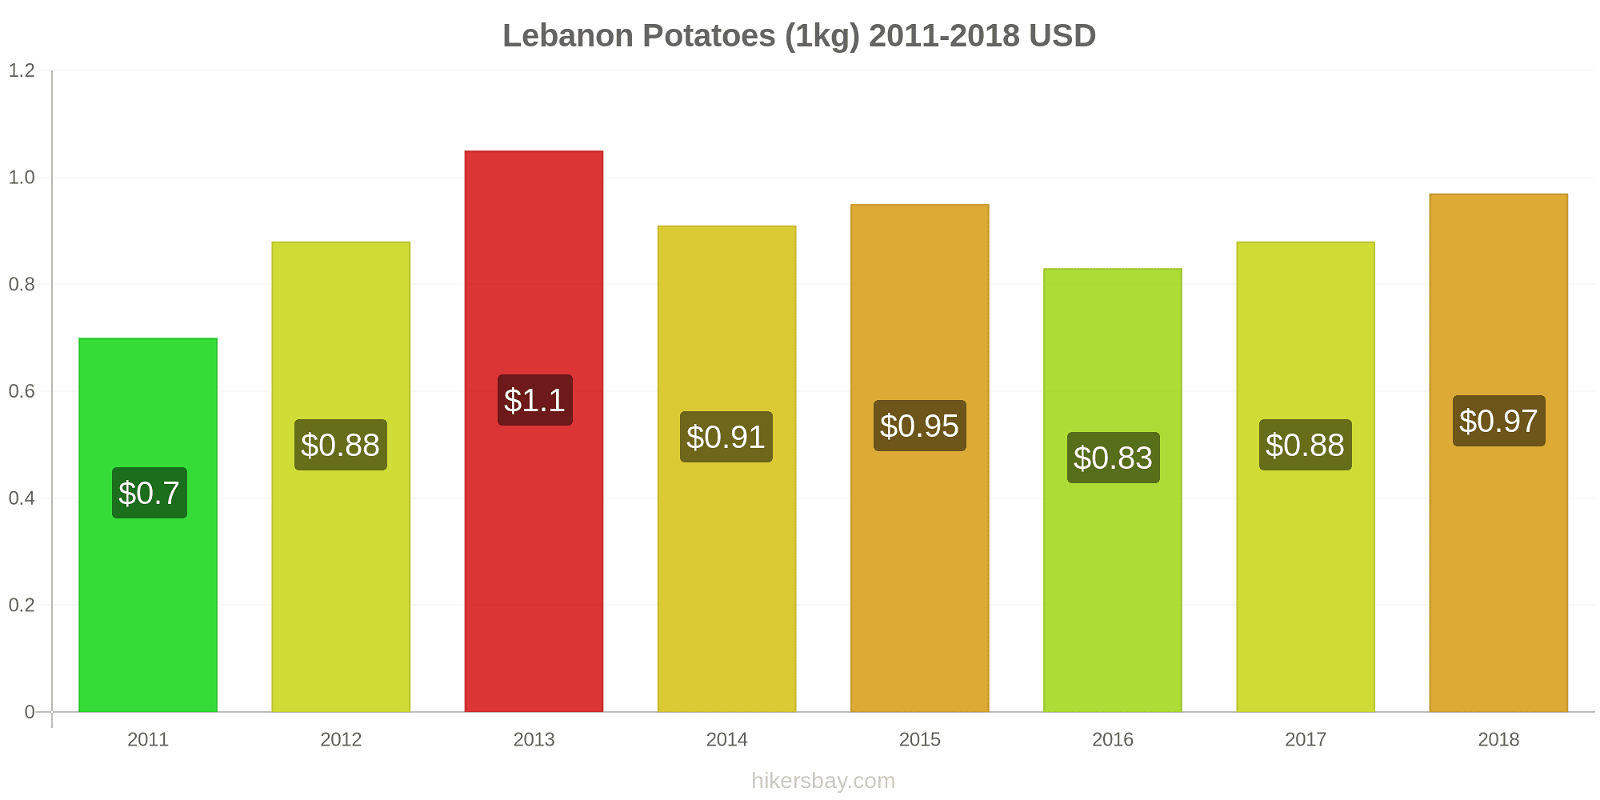 Lebanon price changes Potatoes (1kg) hikersbay.com